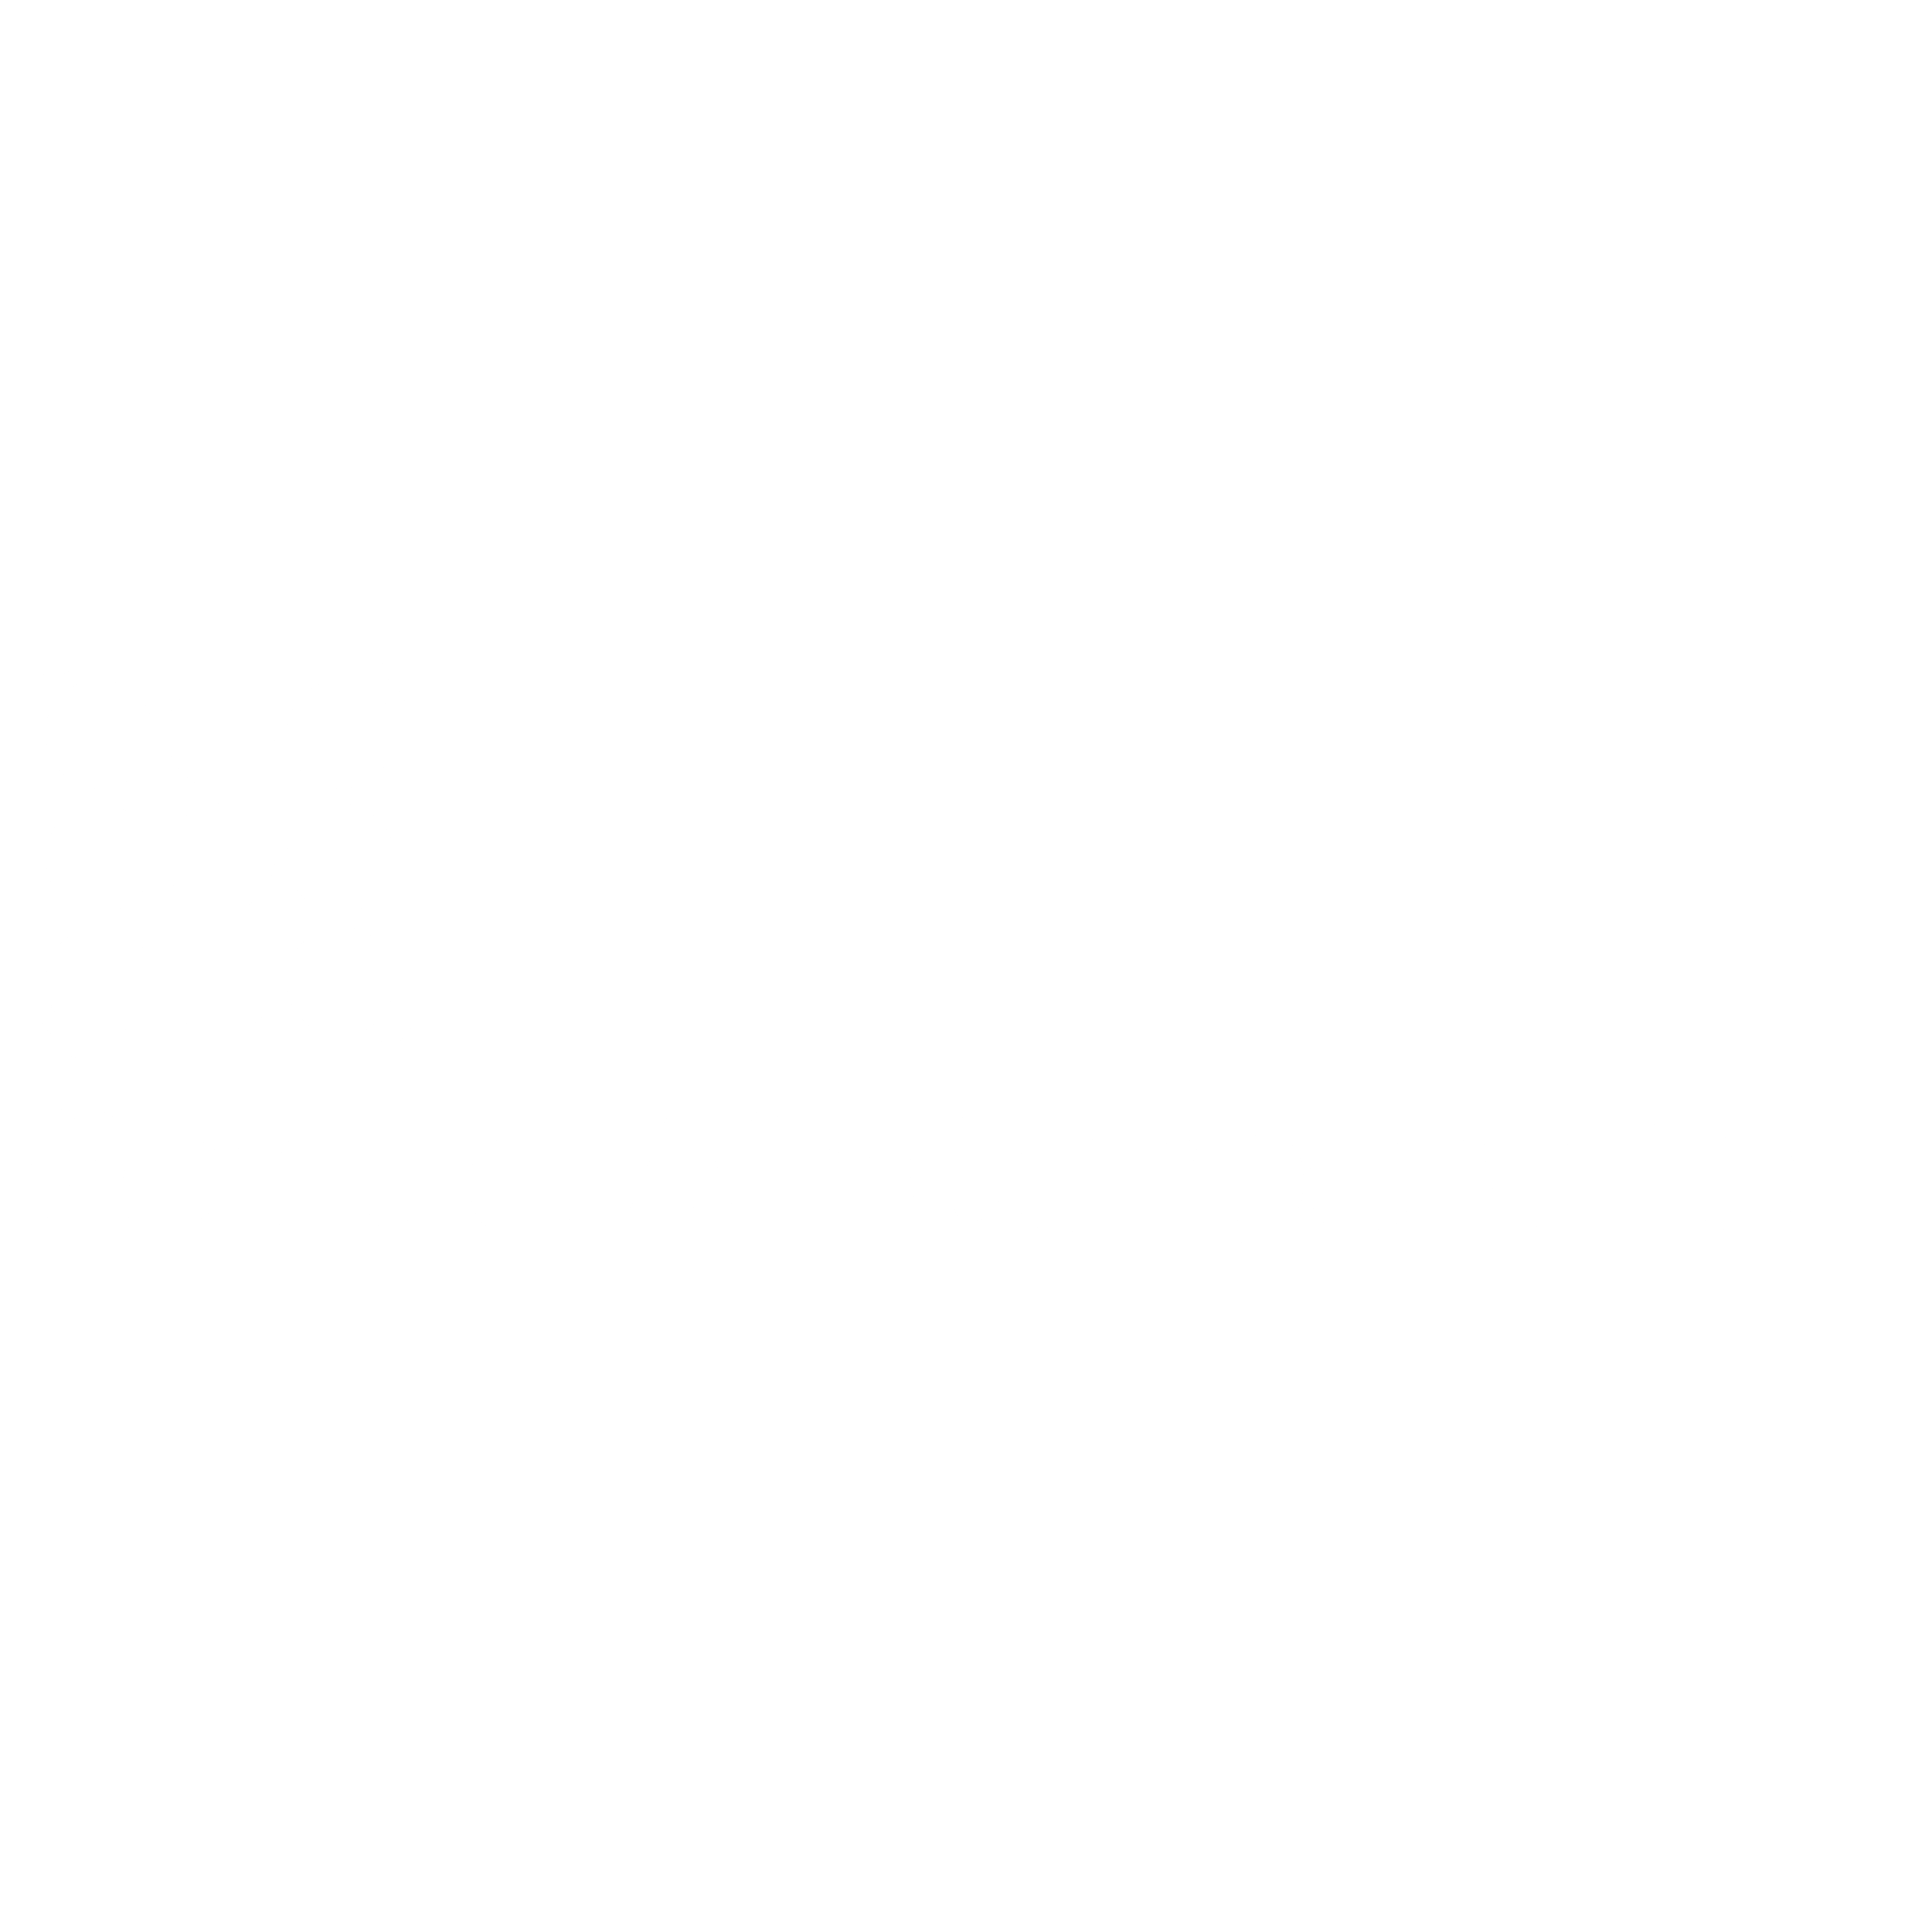 Sealed Air Logo - Sealed Air Corporation Logo PNG Transparent & SVG Vector - Freebie ...